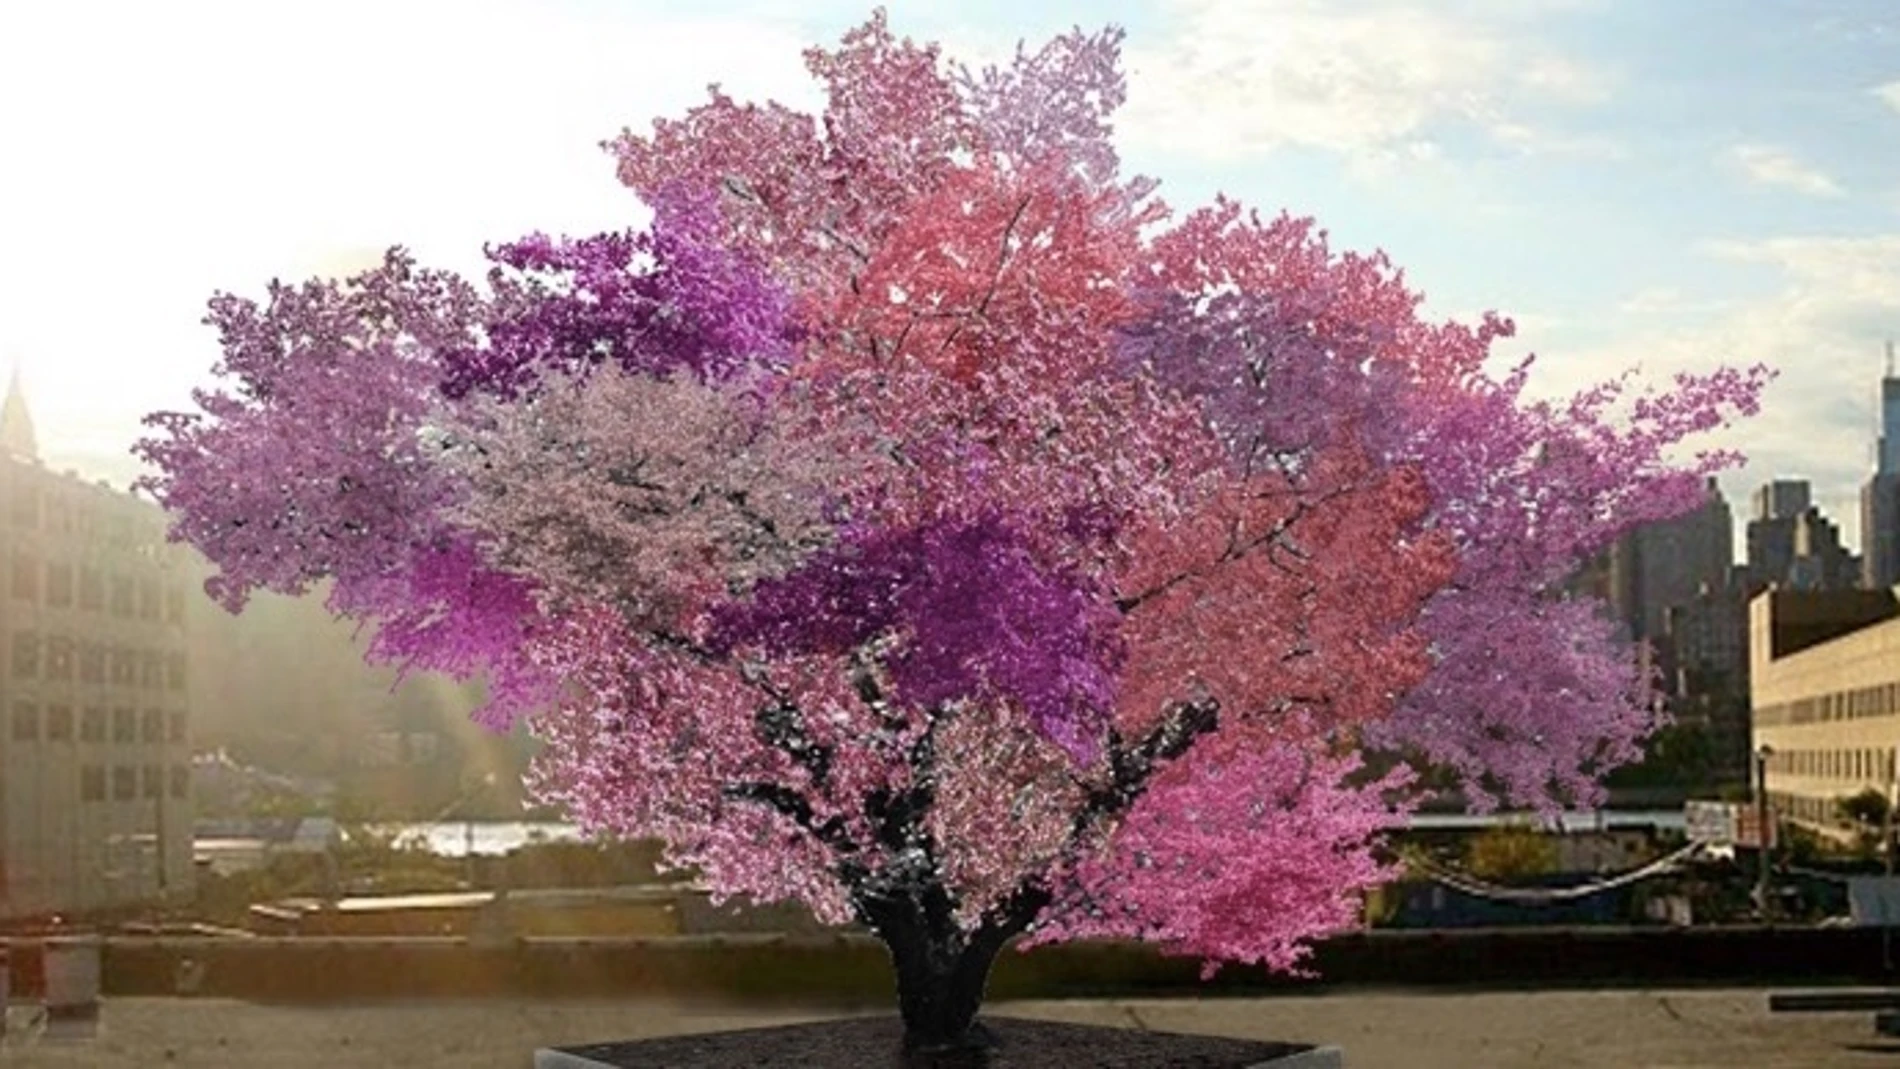 Crean un árbol que da más de 40 tipos de frutos diferentes